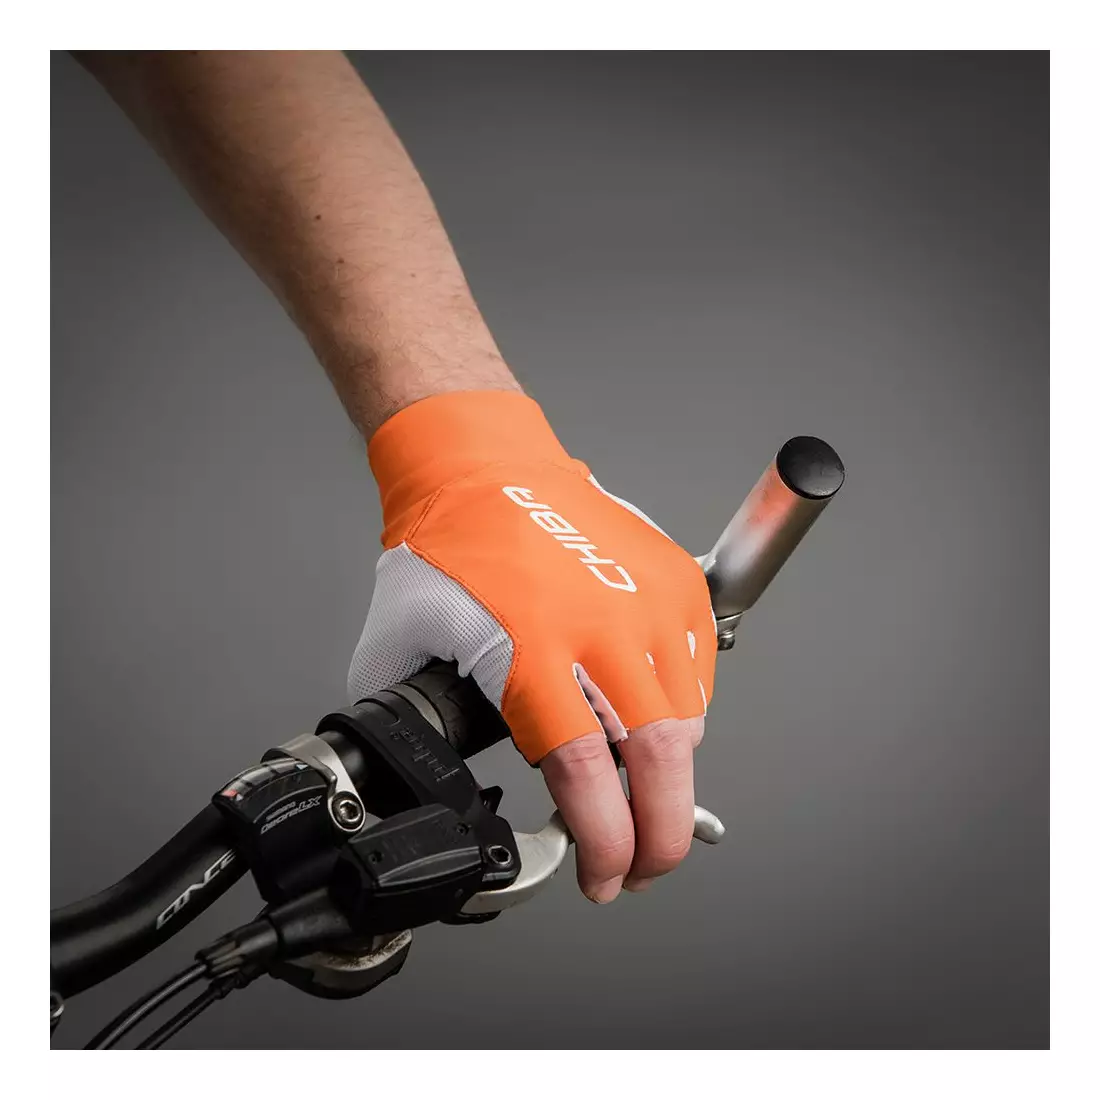 CHIBA MISTRAL cyklistické rukavice, oranžové 3030420